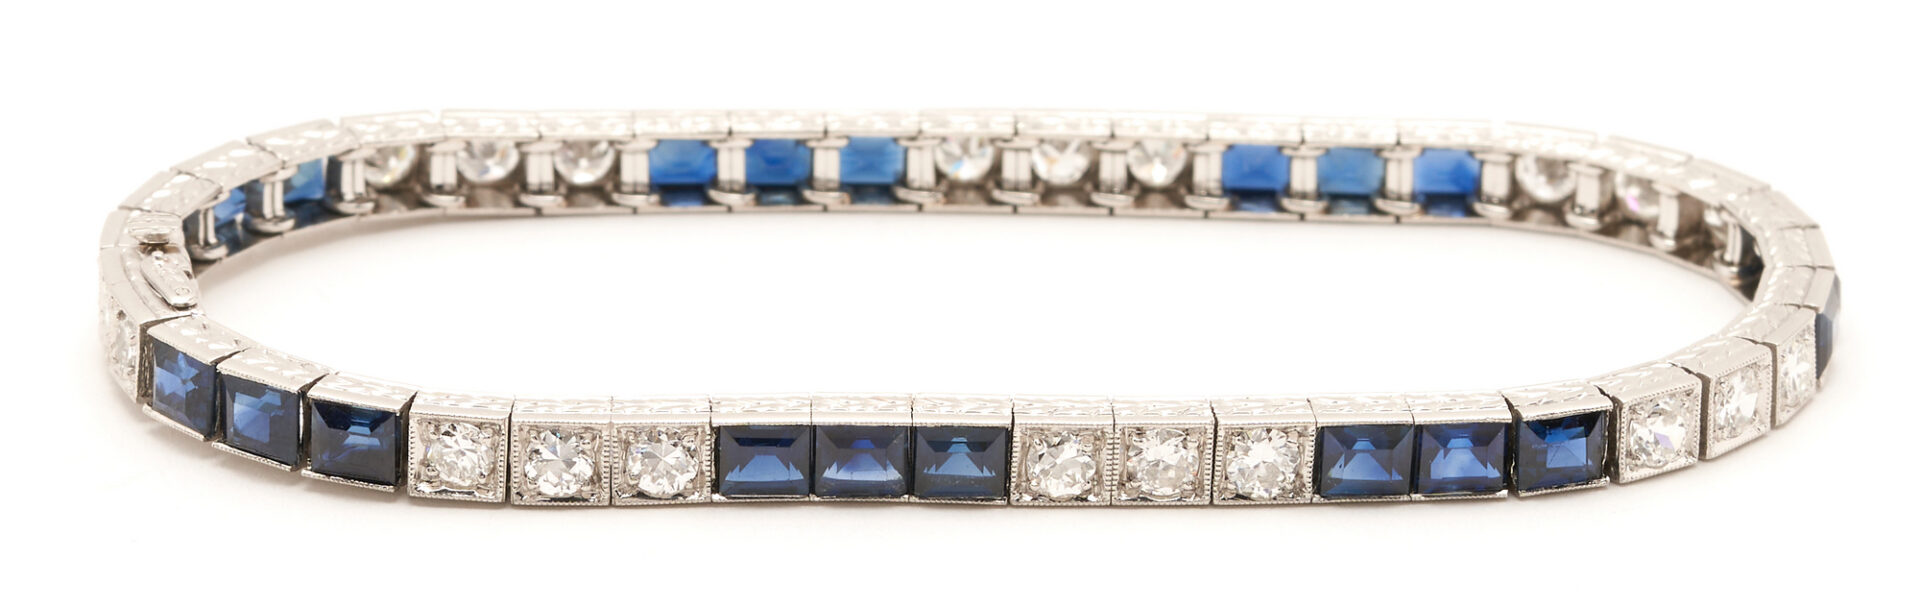 Lot 830: Platinum Diamond & Sapphire Line Bracelet